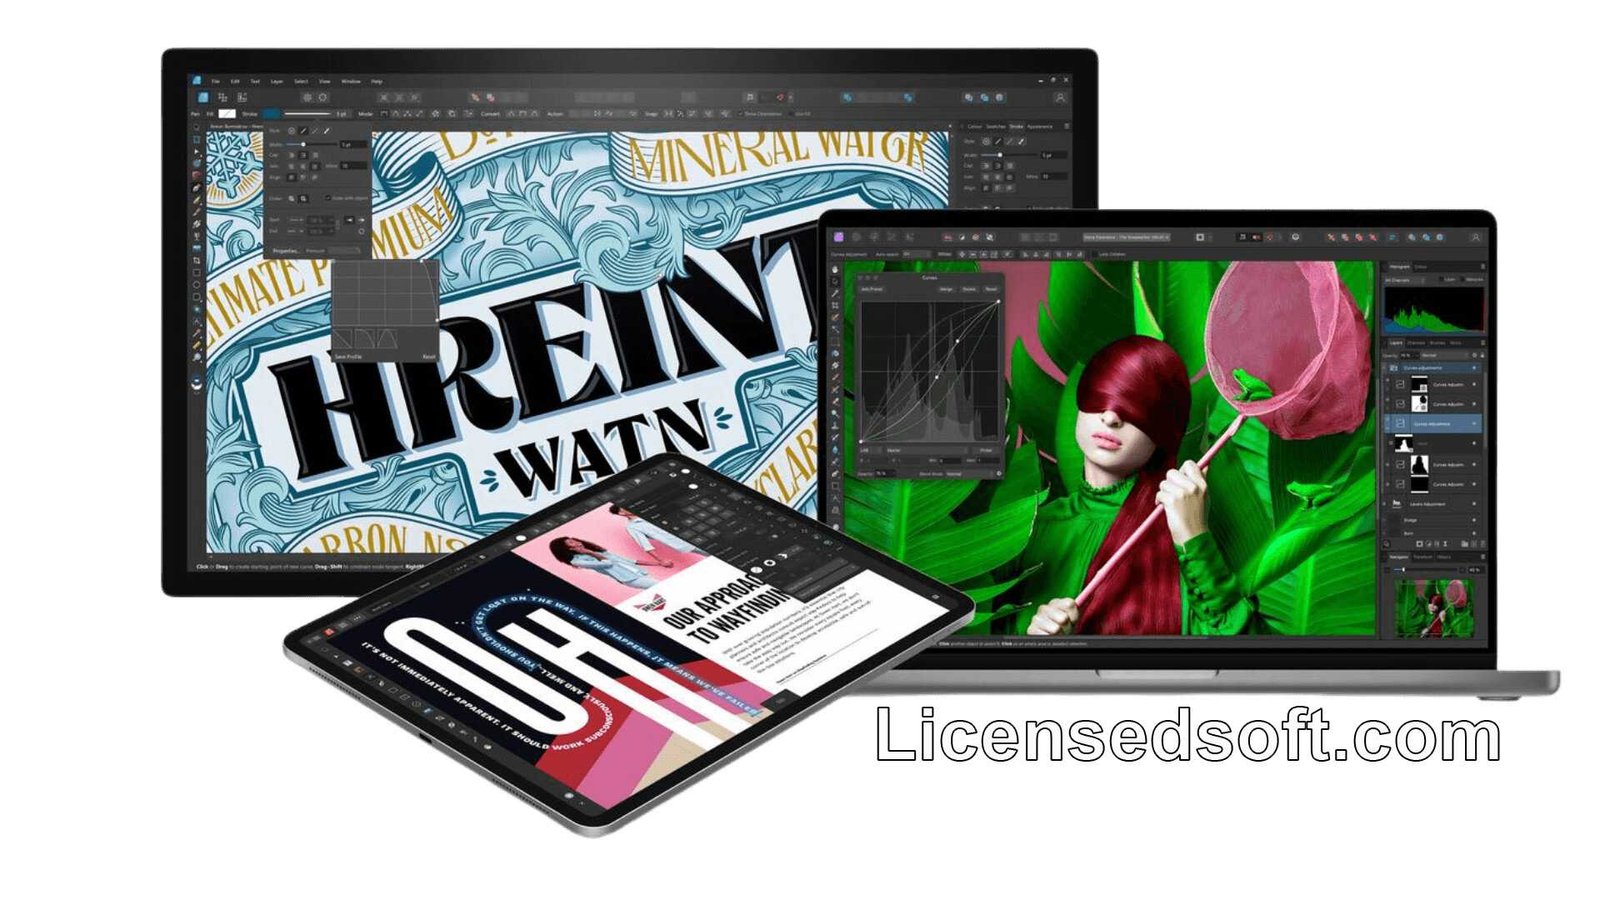 Affinity Designer for macOS Lifetime Premium cover photo by licensedsoft